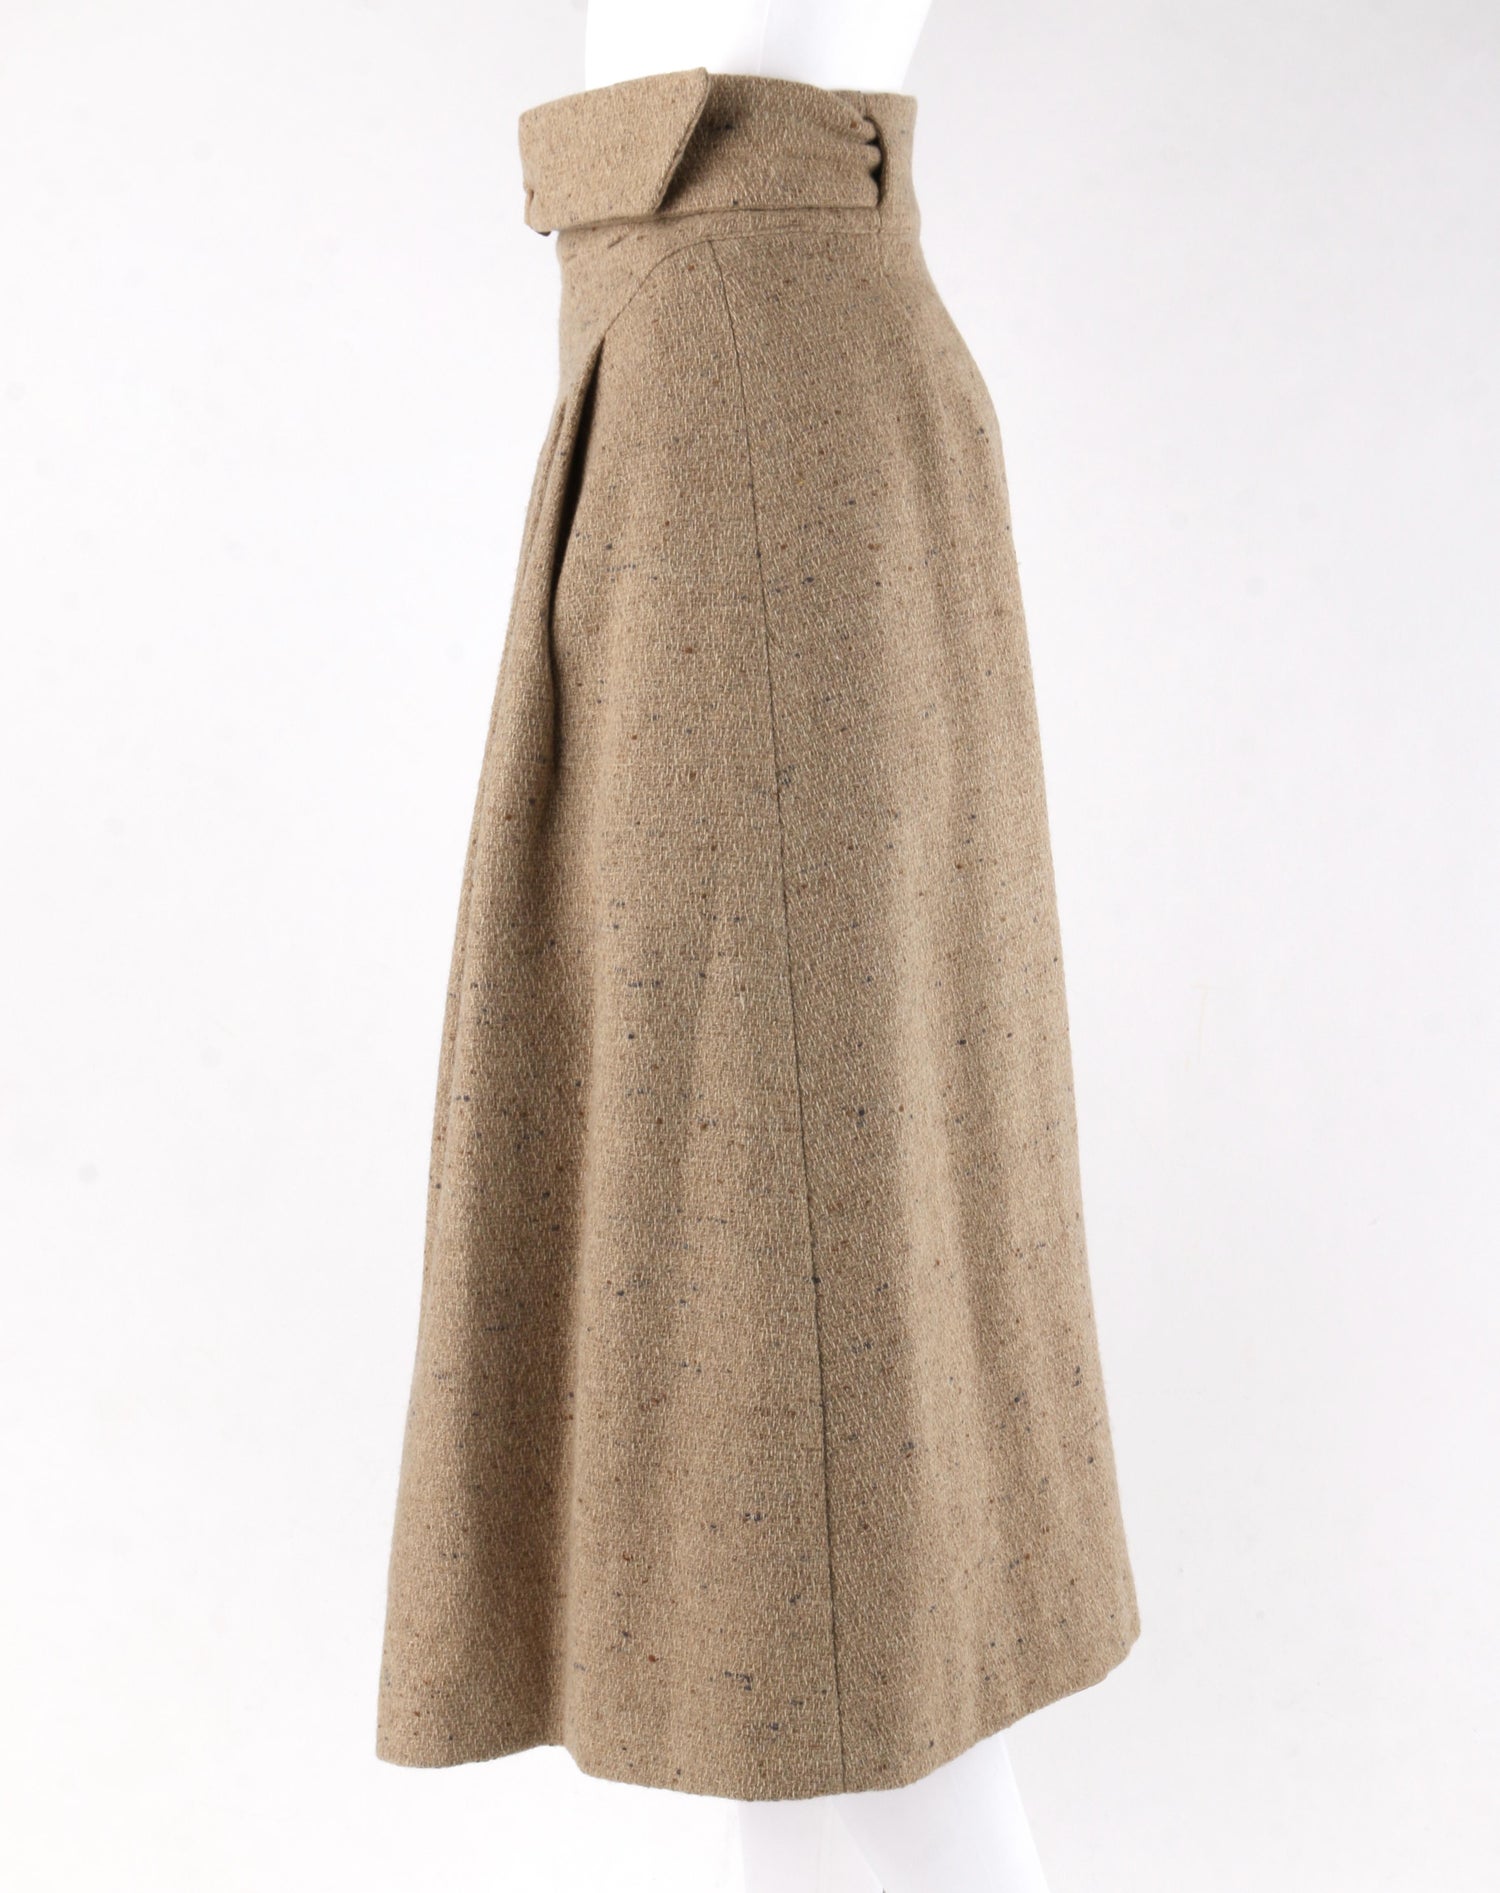 GIORGIO ARMANI c.1980's Brown Tweed Wool Pleated Wrap 